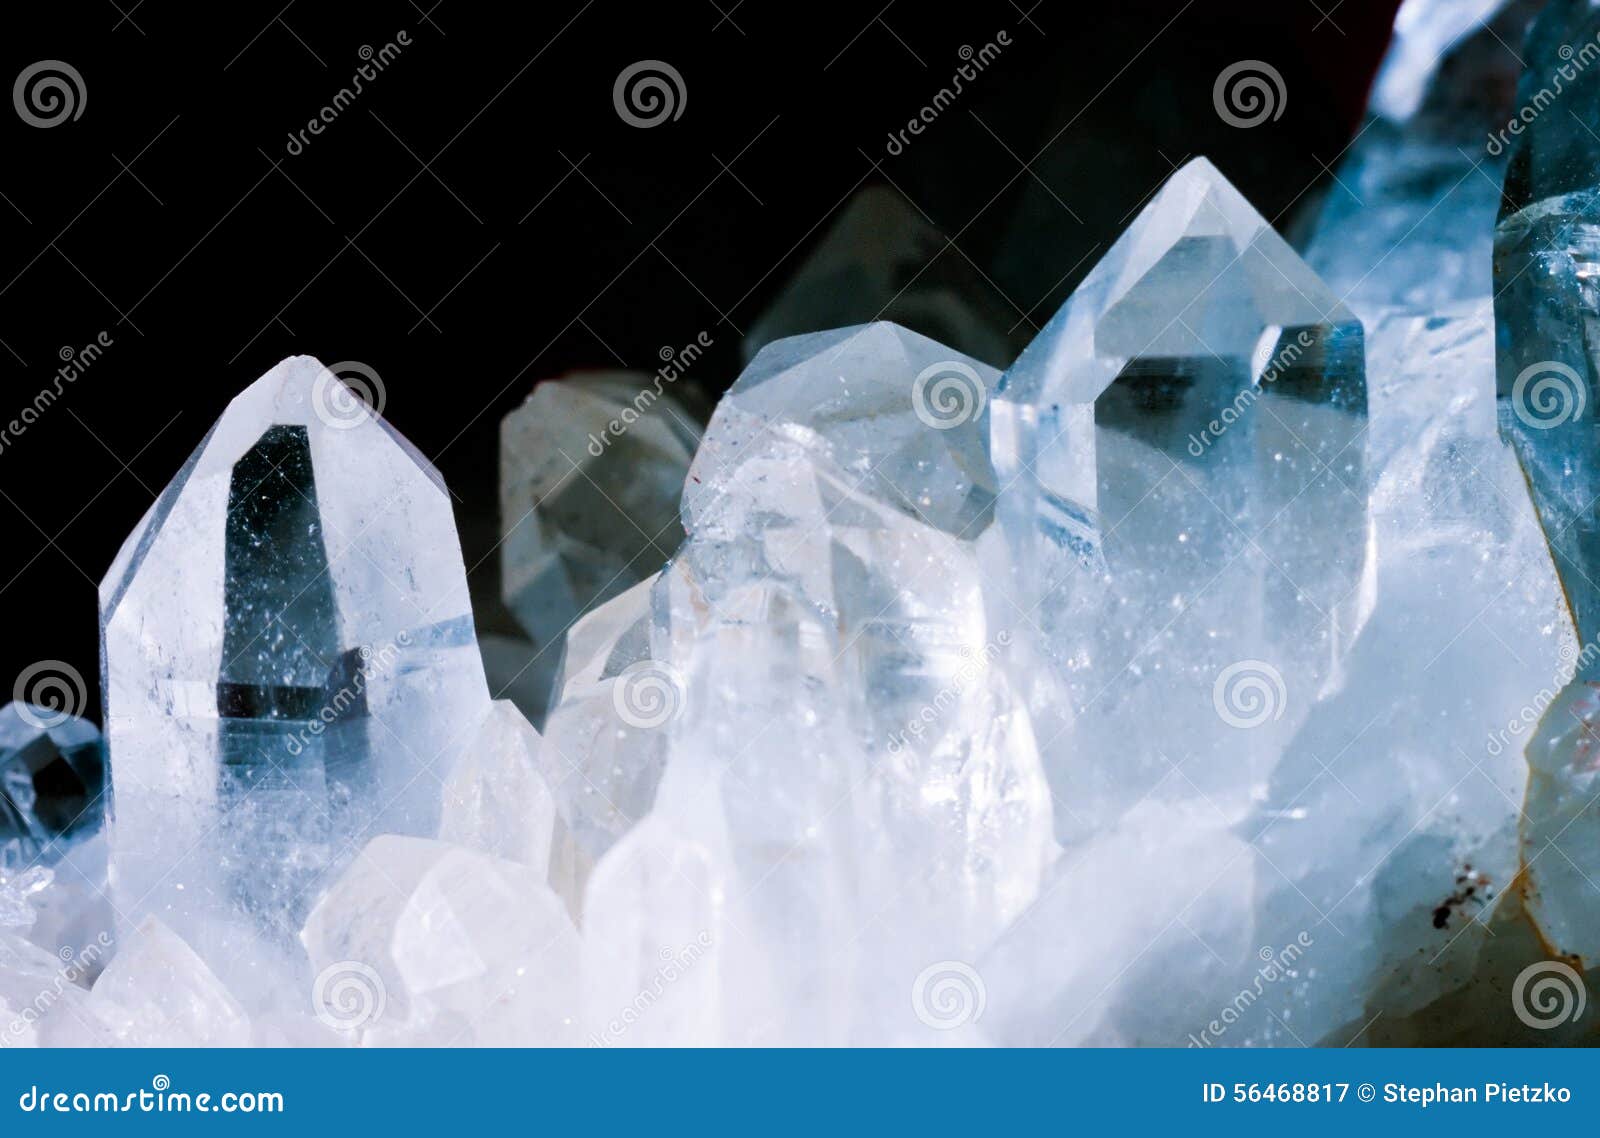 rock crystals quartz cluster black background